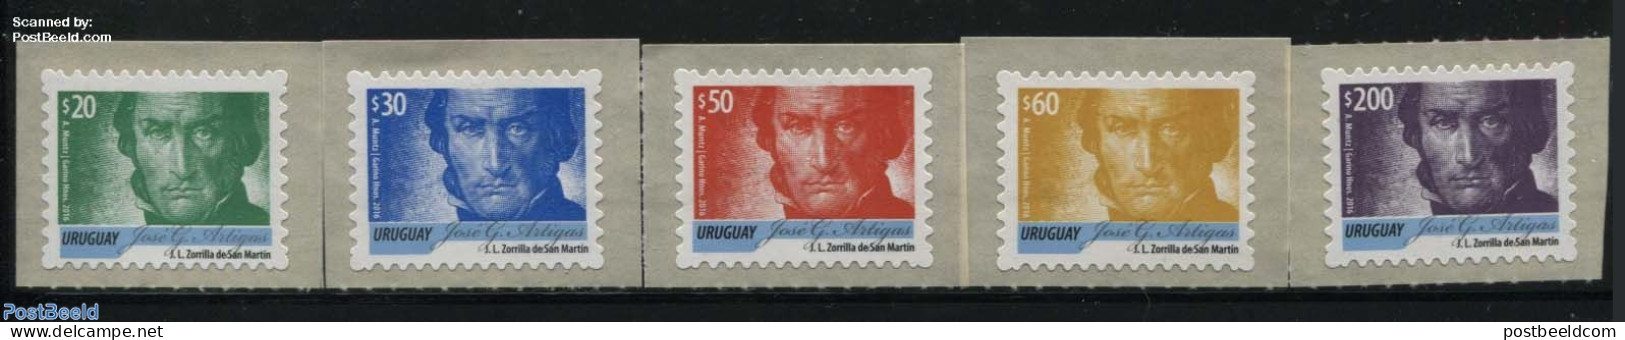 Uruguay 2016 Definitives, Jose G. Artigas 5v S-a, Mint NH - Uruguay